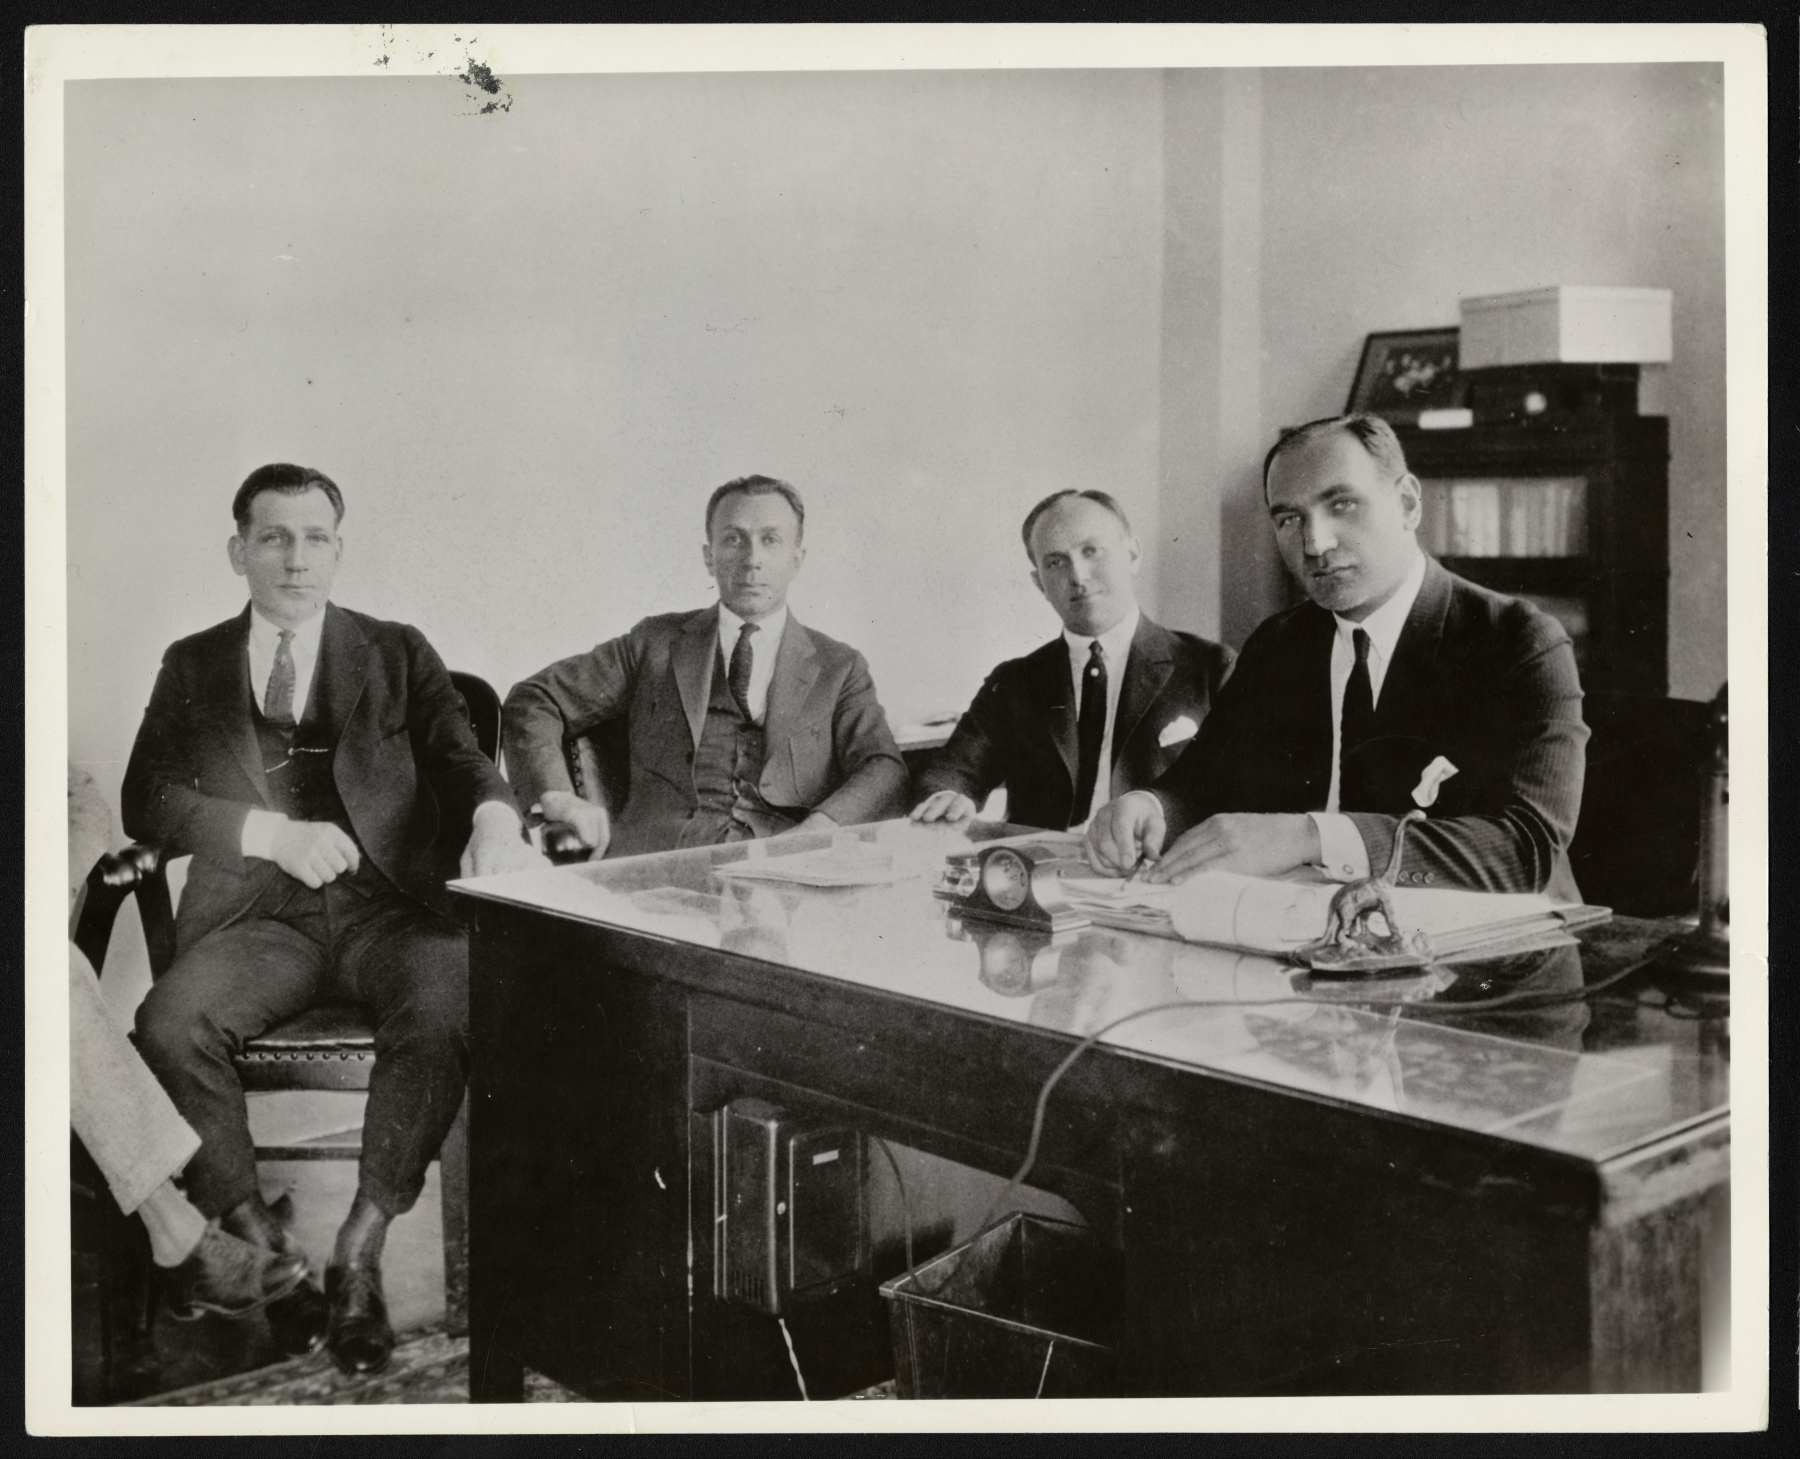 From left: Sam Warner, Harry M. Warner, Jack L. Warner, and Albert Warner, undated. Courtesy Margaret Herrick Library, Academy of Motion Picture Arts and Sciences.